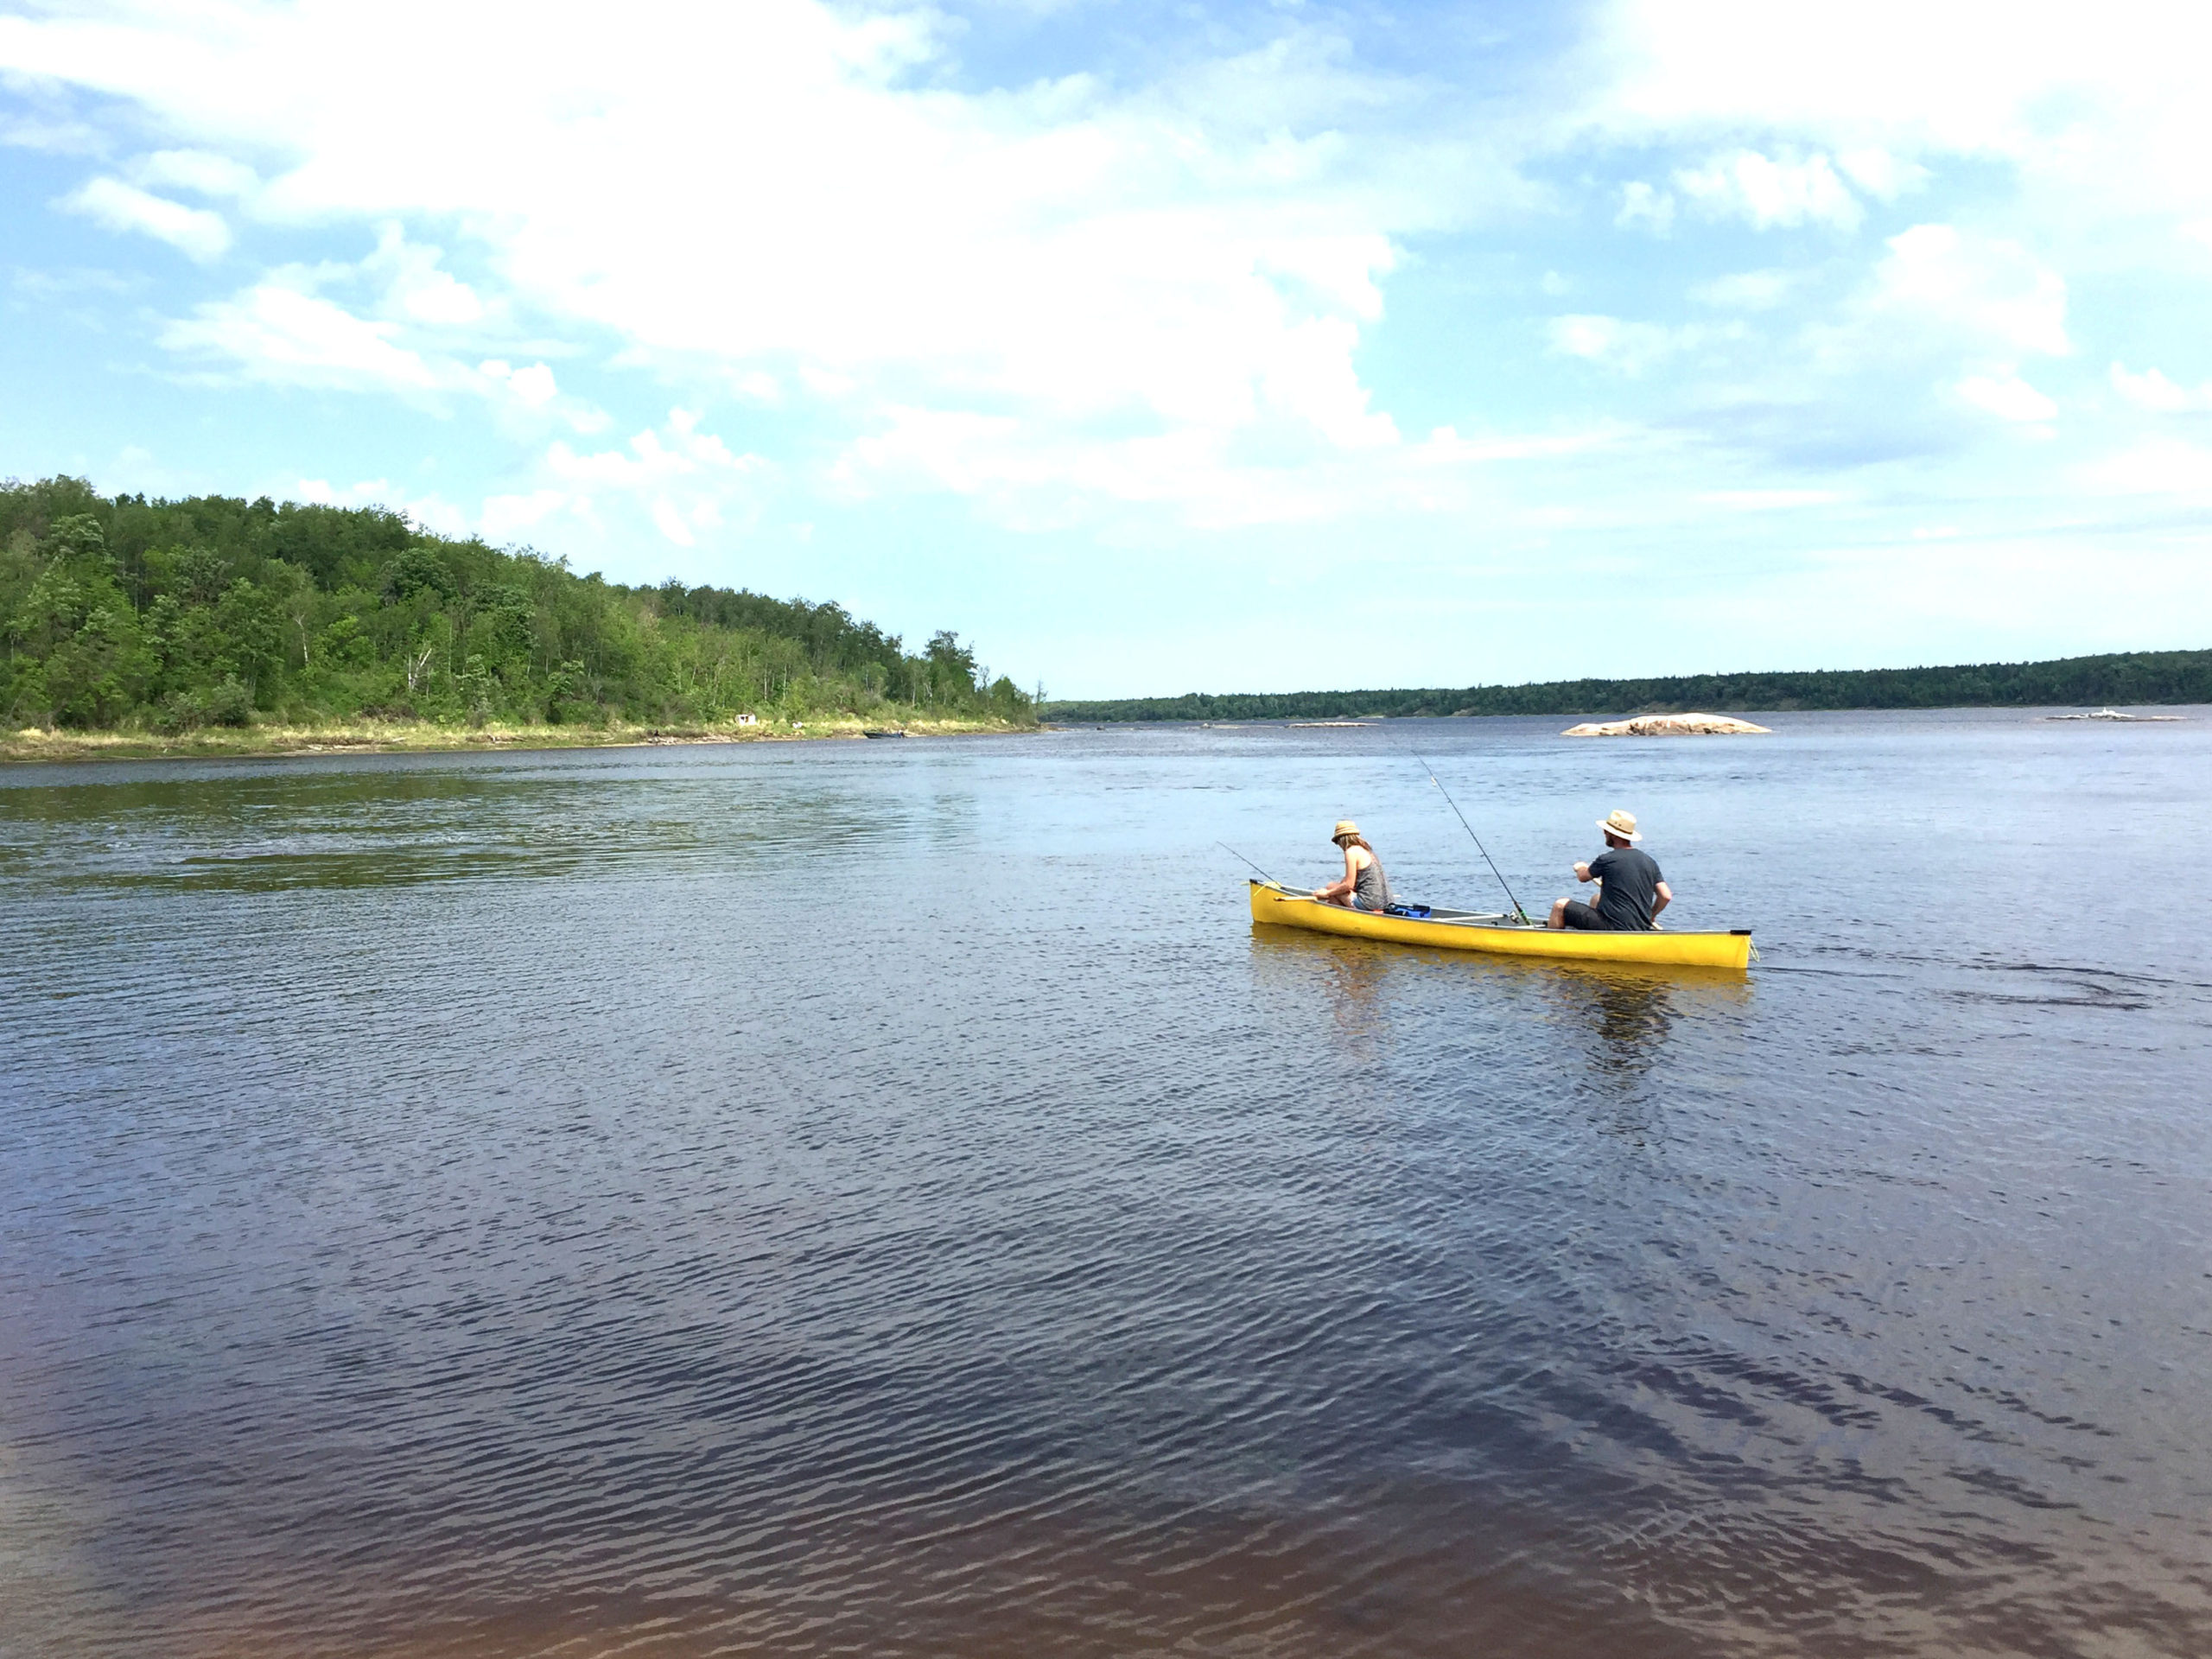 Two people fishing in a yellow canoe